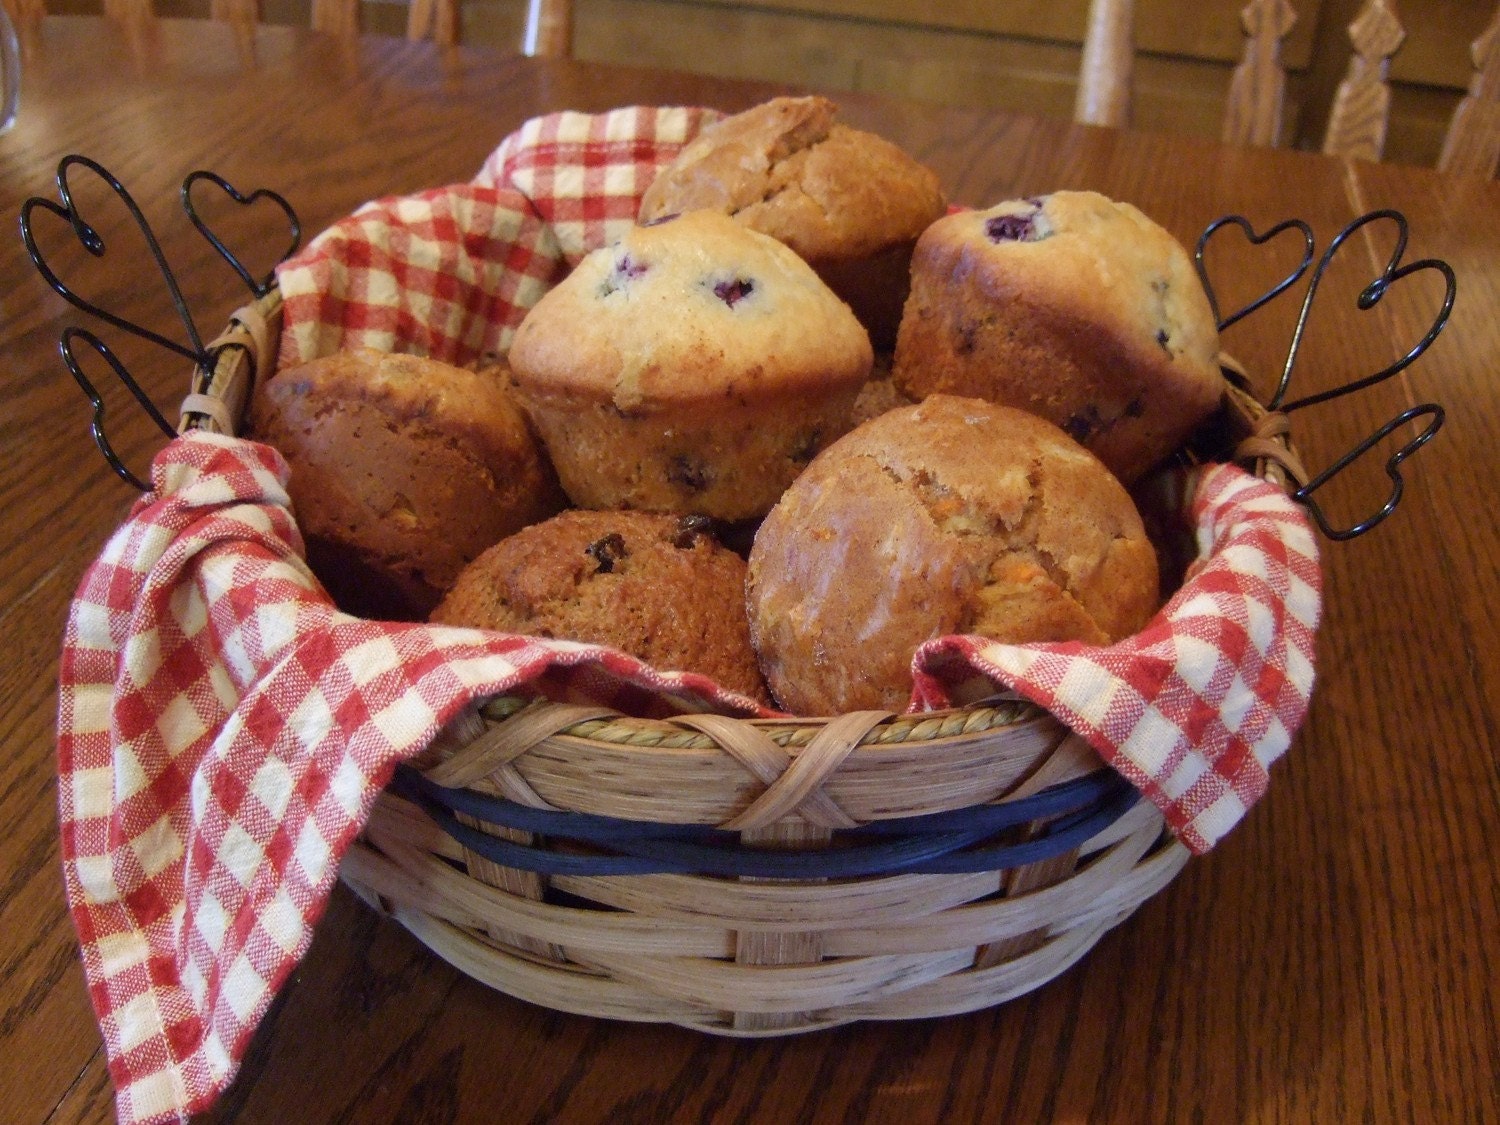 Large Round Muffin Basket